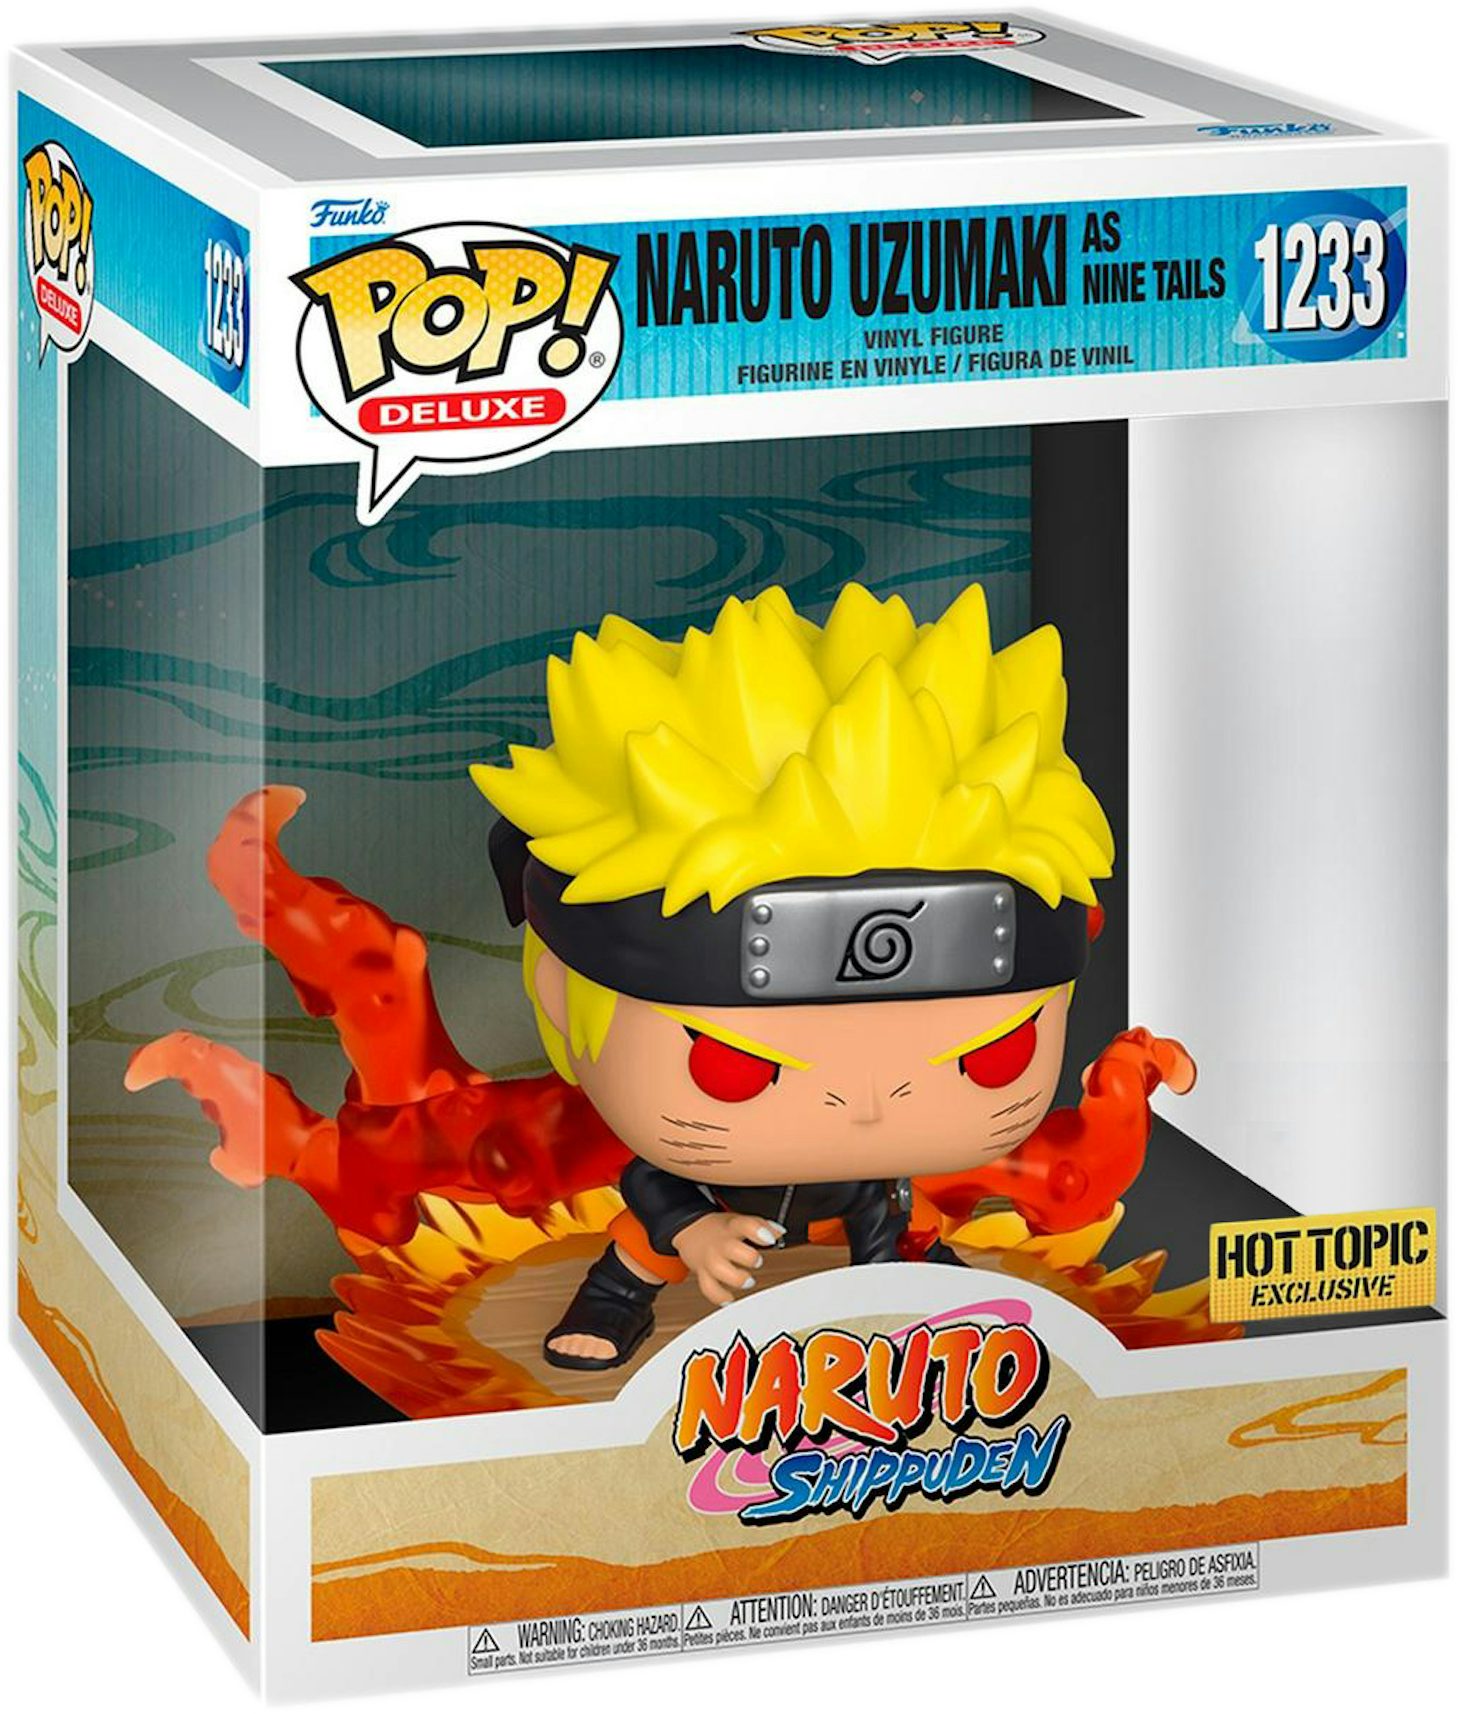 Funko Pop! Deluxe Naruto Shippuden Naruto Uzumaki as Nine Tails Hot Topic  Exclusive Figure #1233 - US